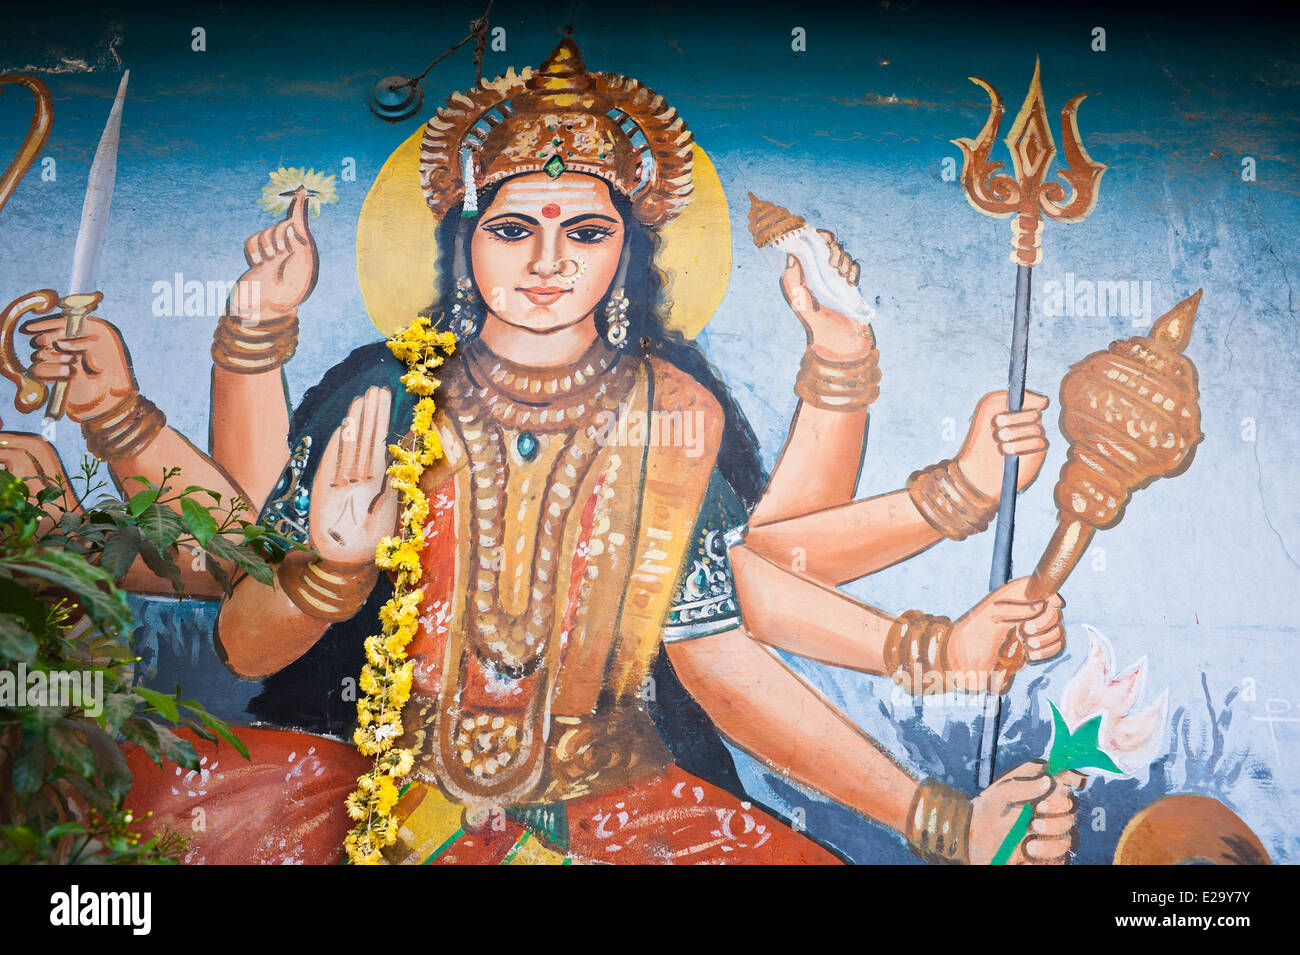 India, Tamil Nadu State, Kanchipuram, Shiva painting Stock Photo